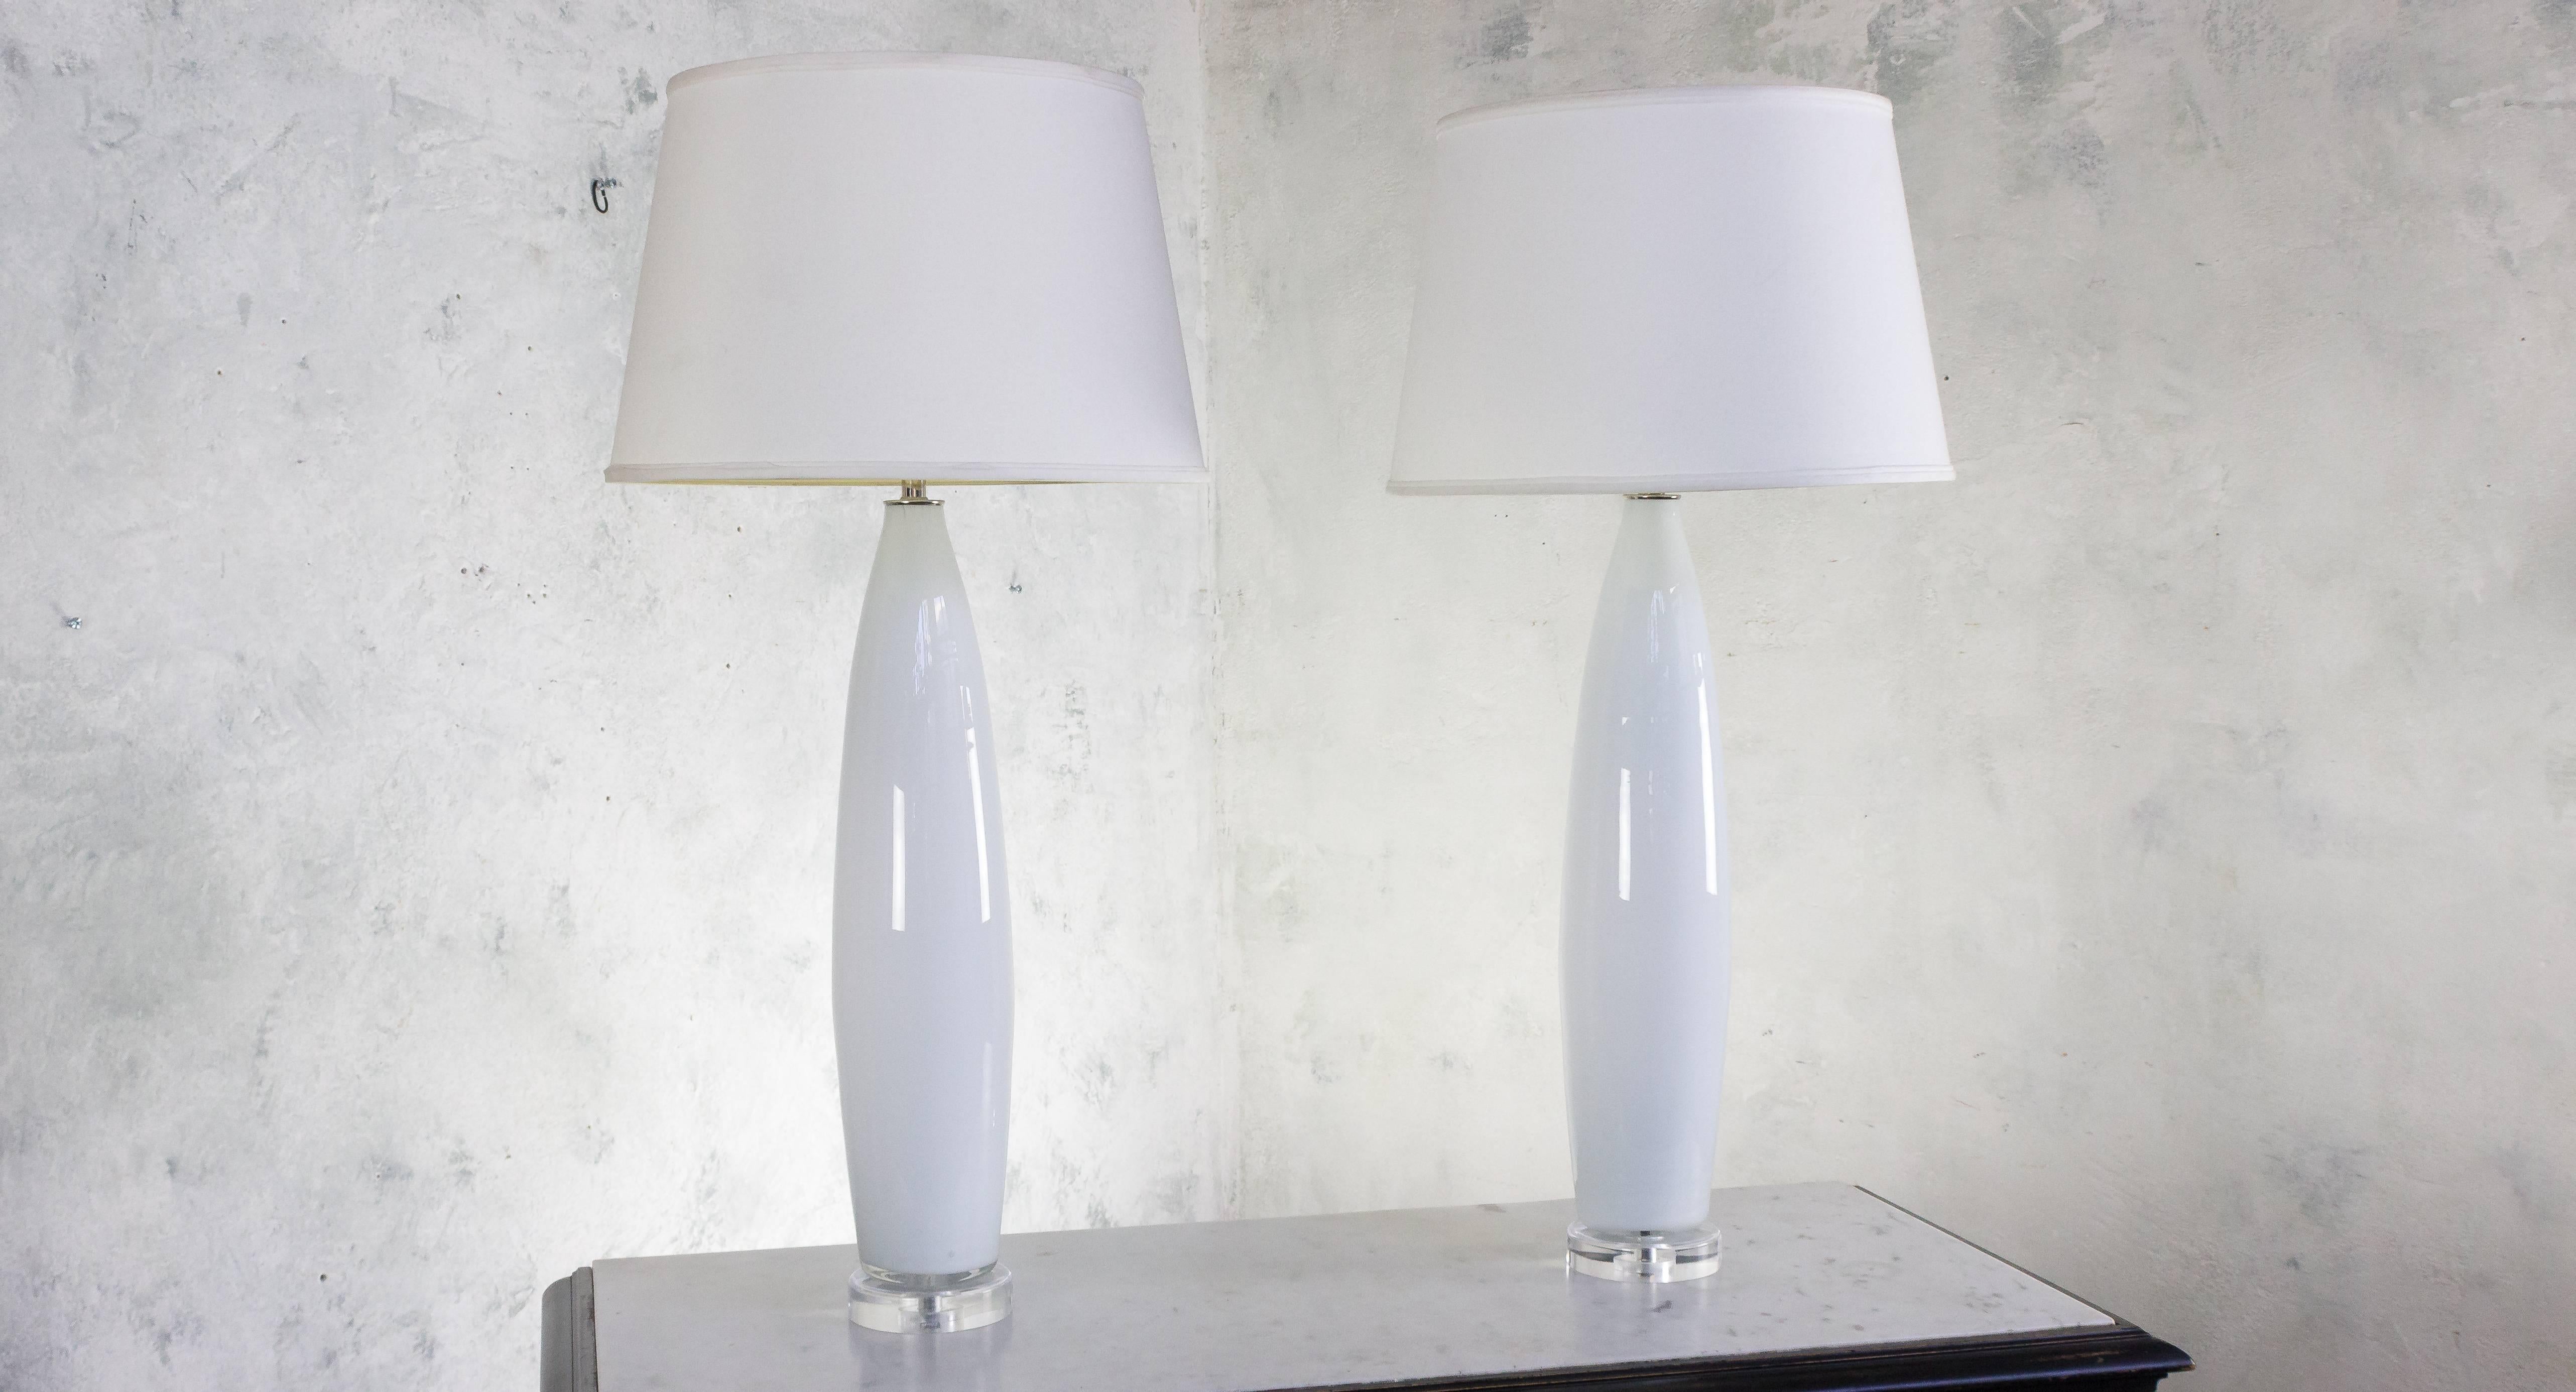 Pair of white case glass Murano lamps on new plexiglass bases.